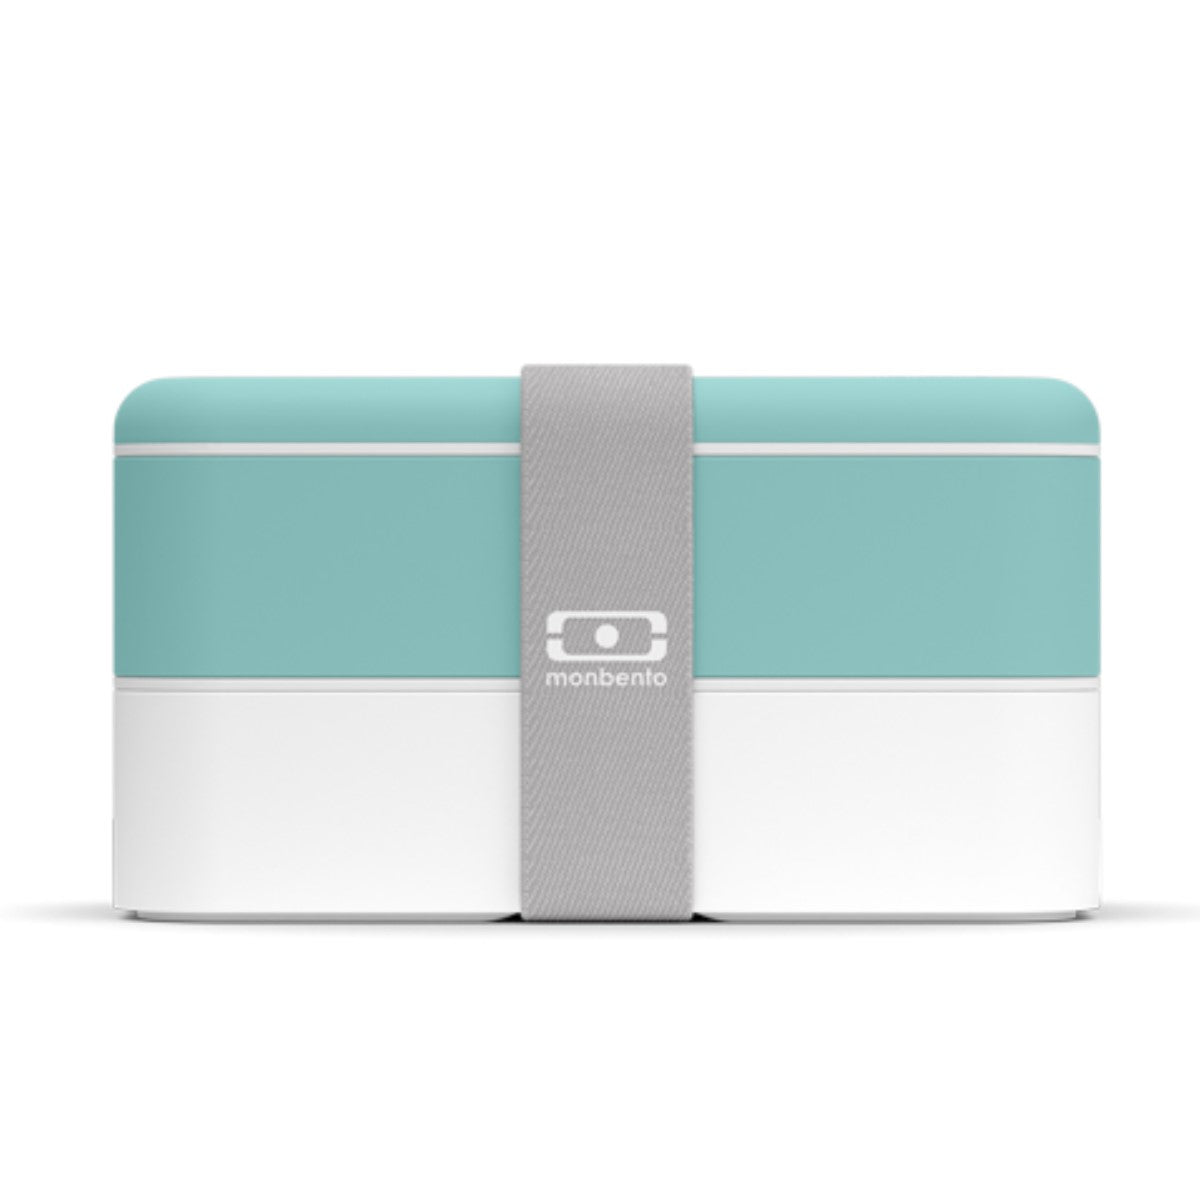 Bento box Original Lagoon | Design unico